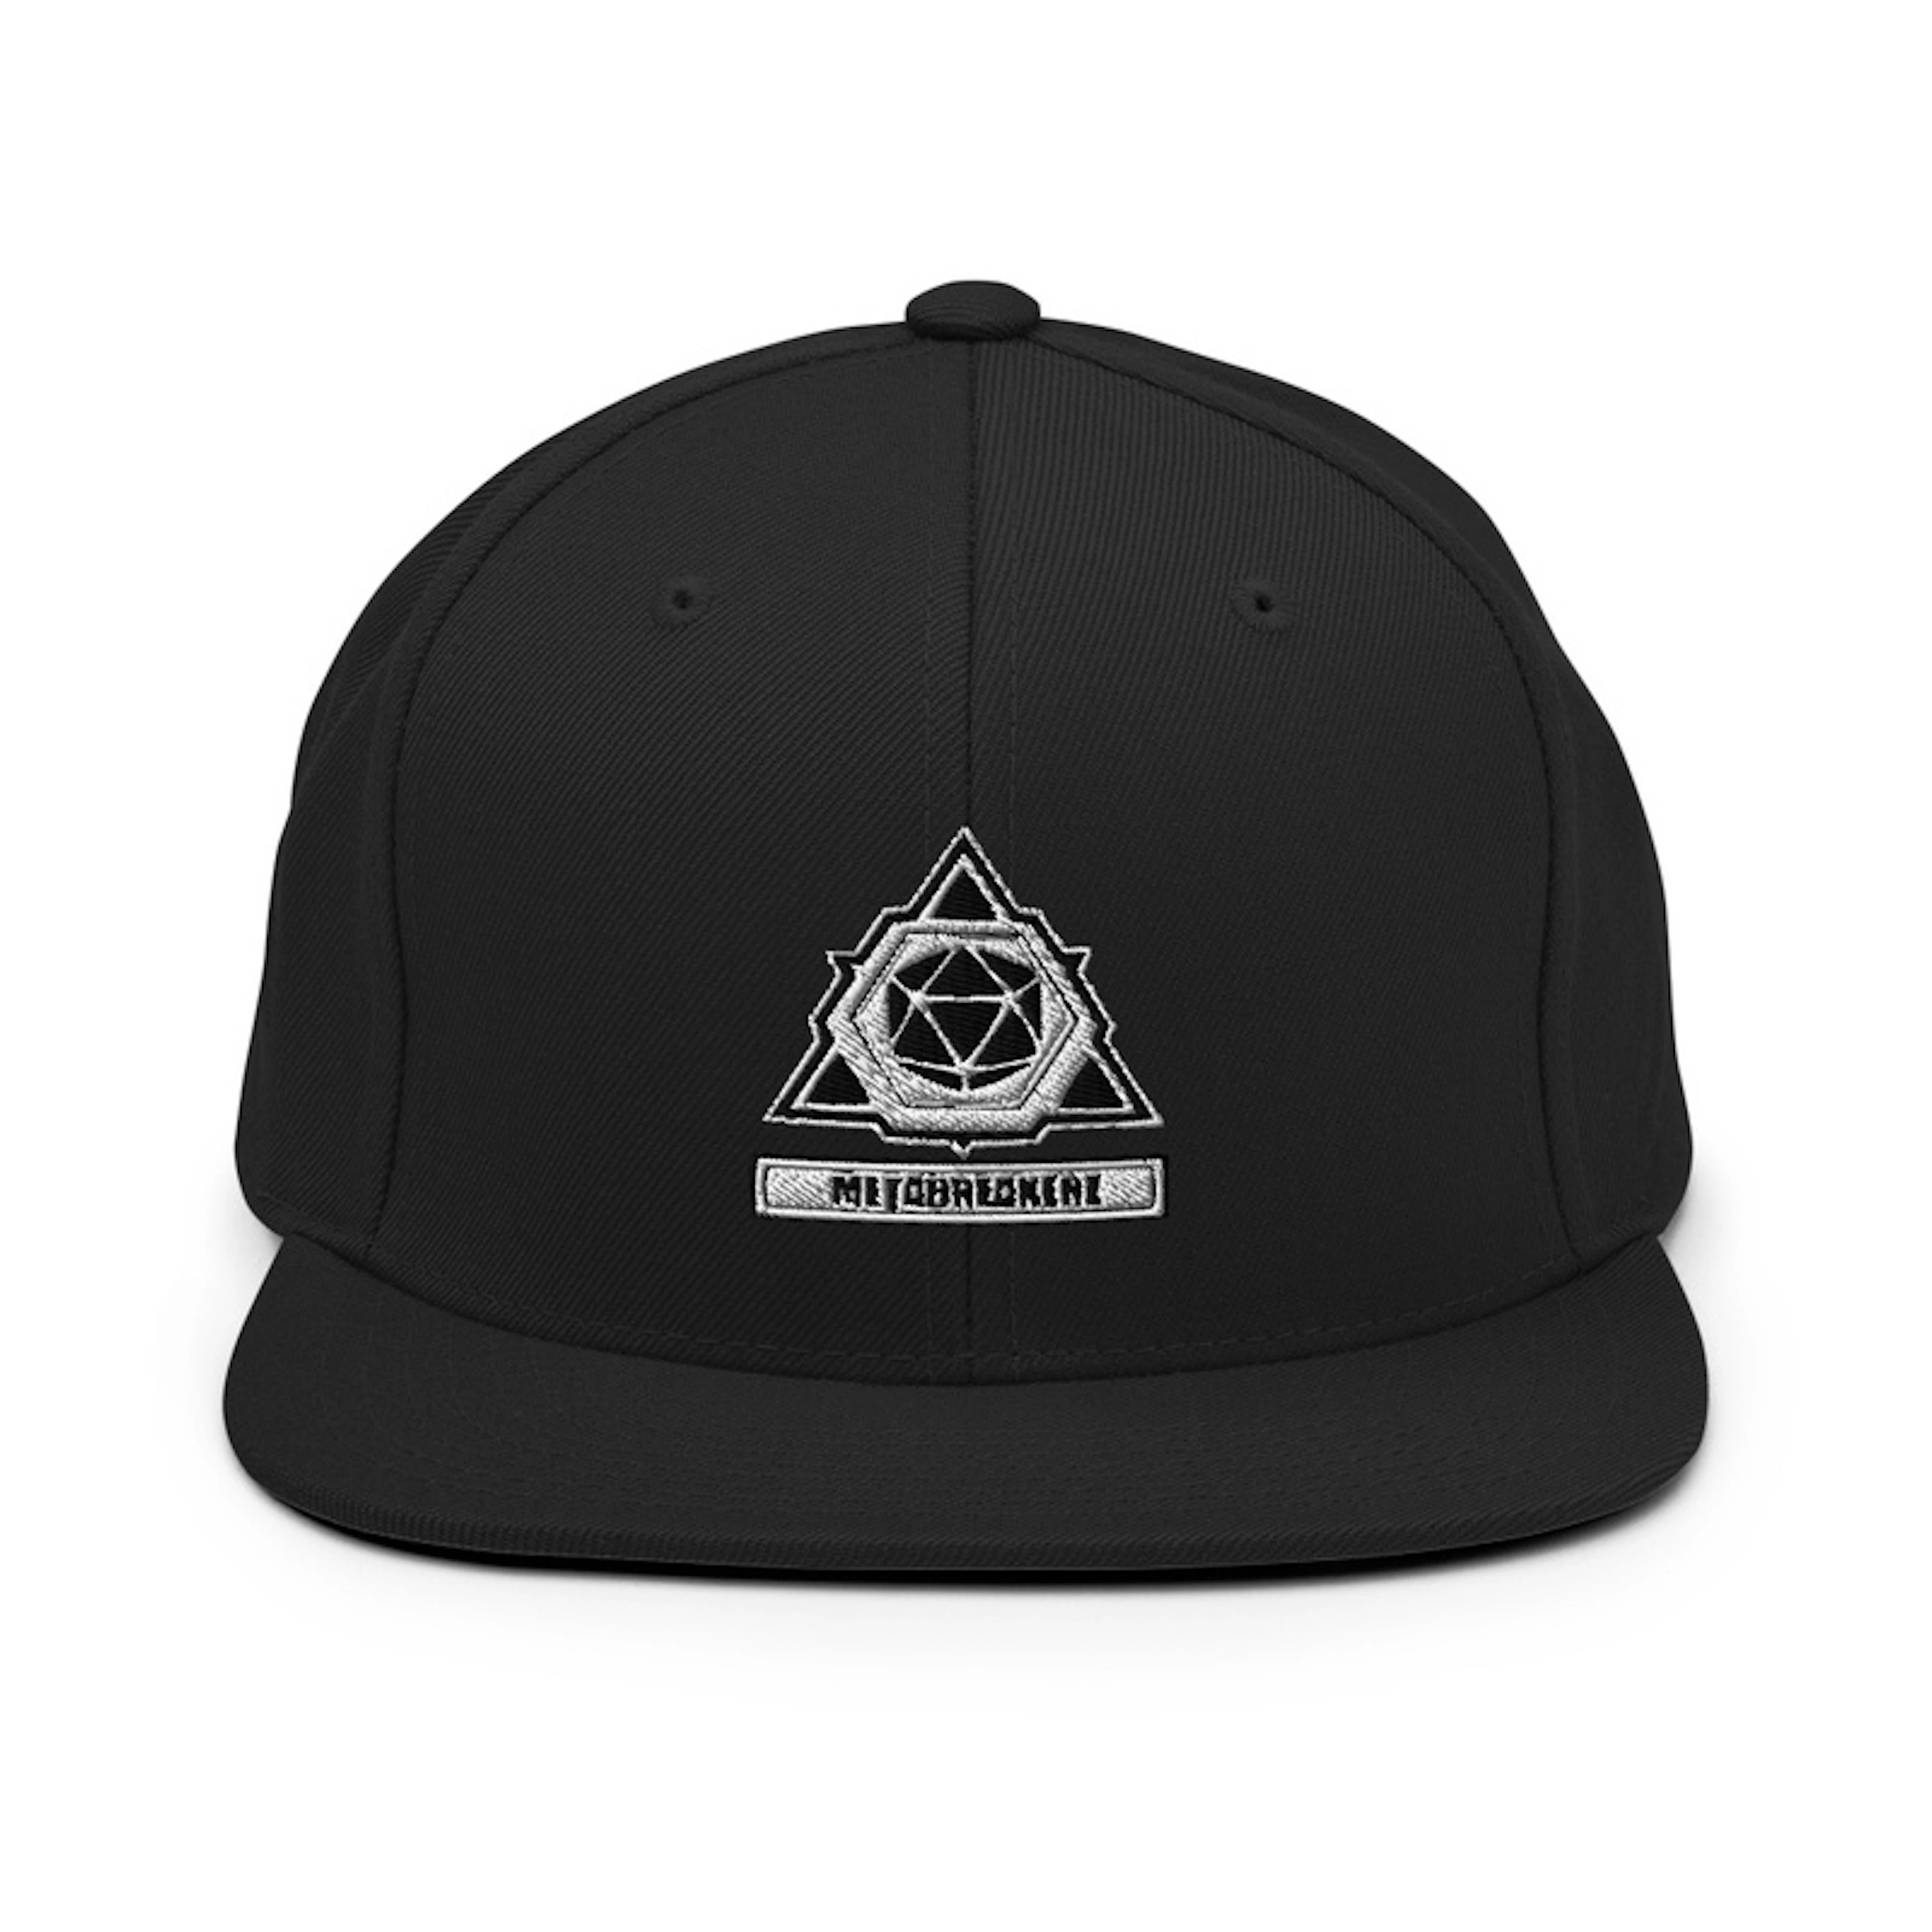 Metabreakerz logo hat